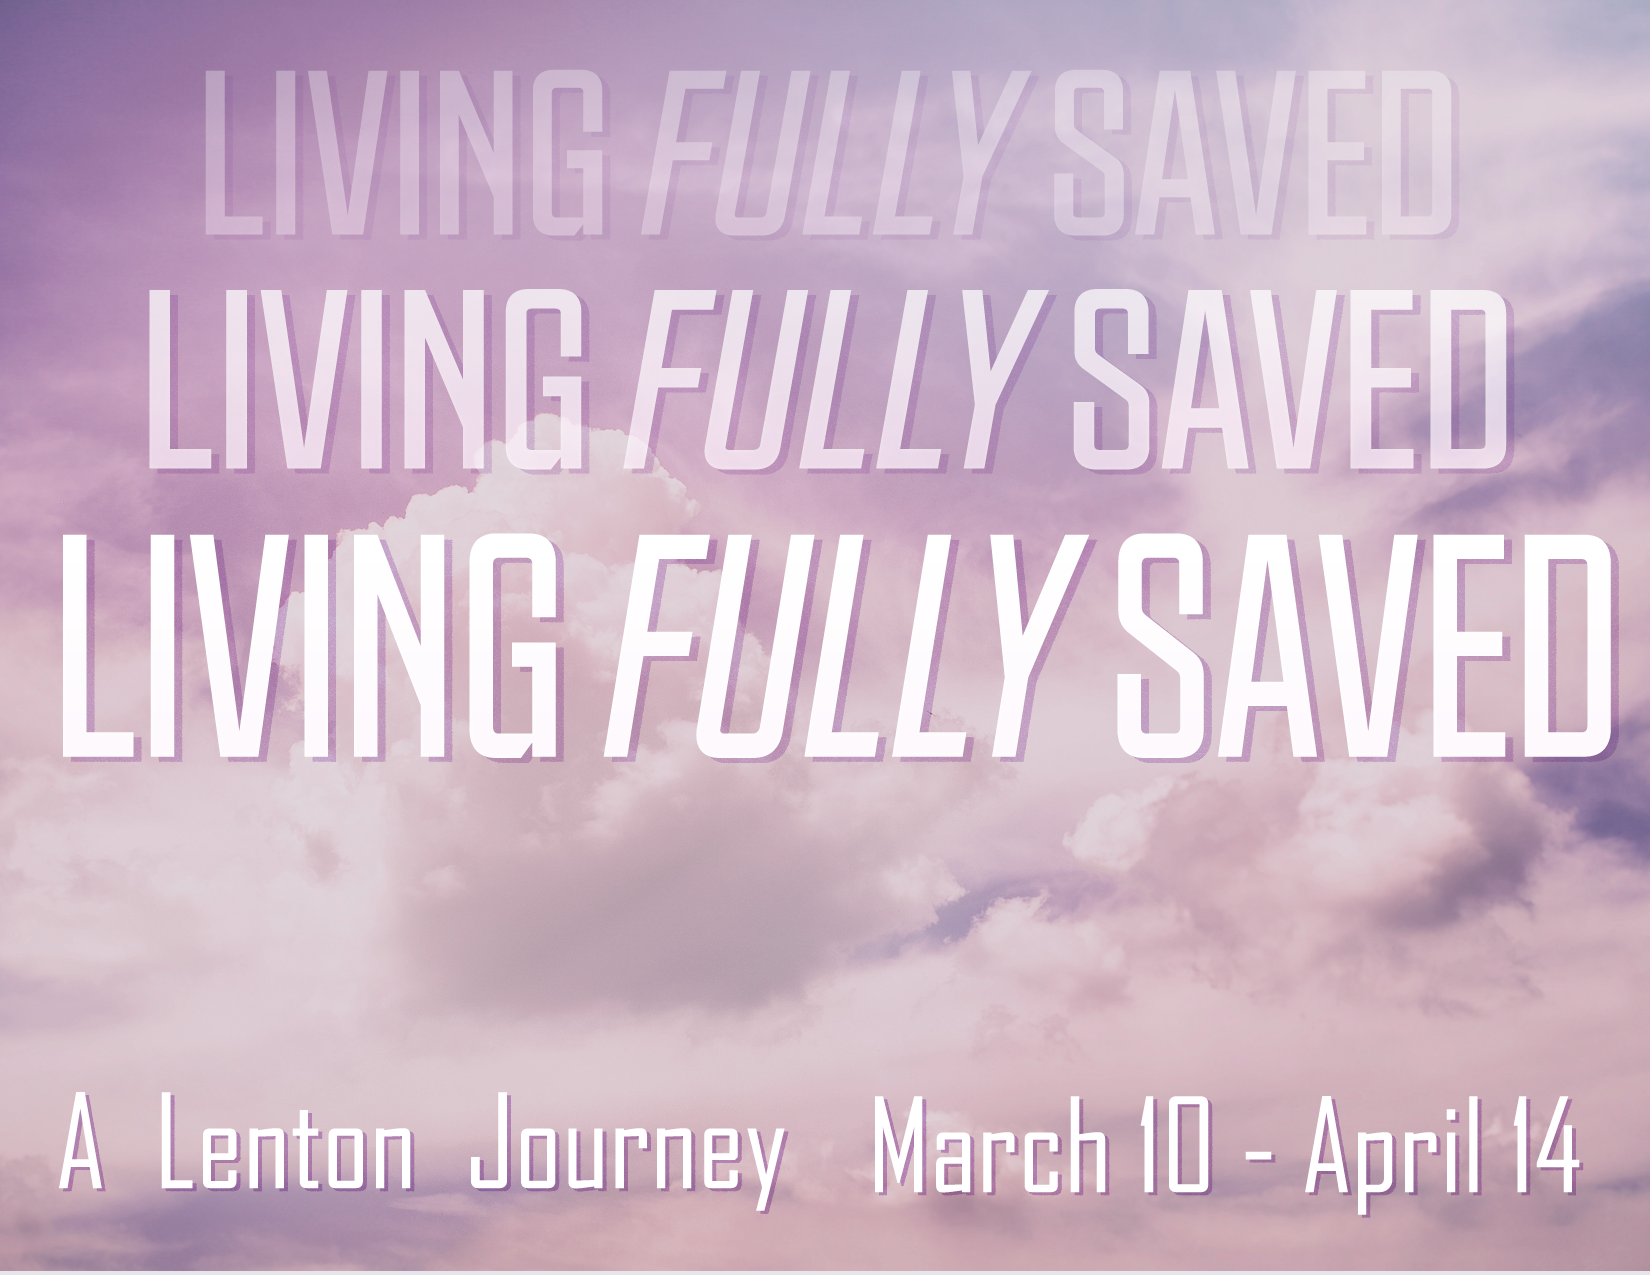 Living Fully Saved – Loving in Community